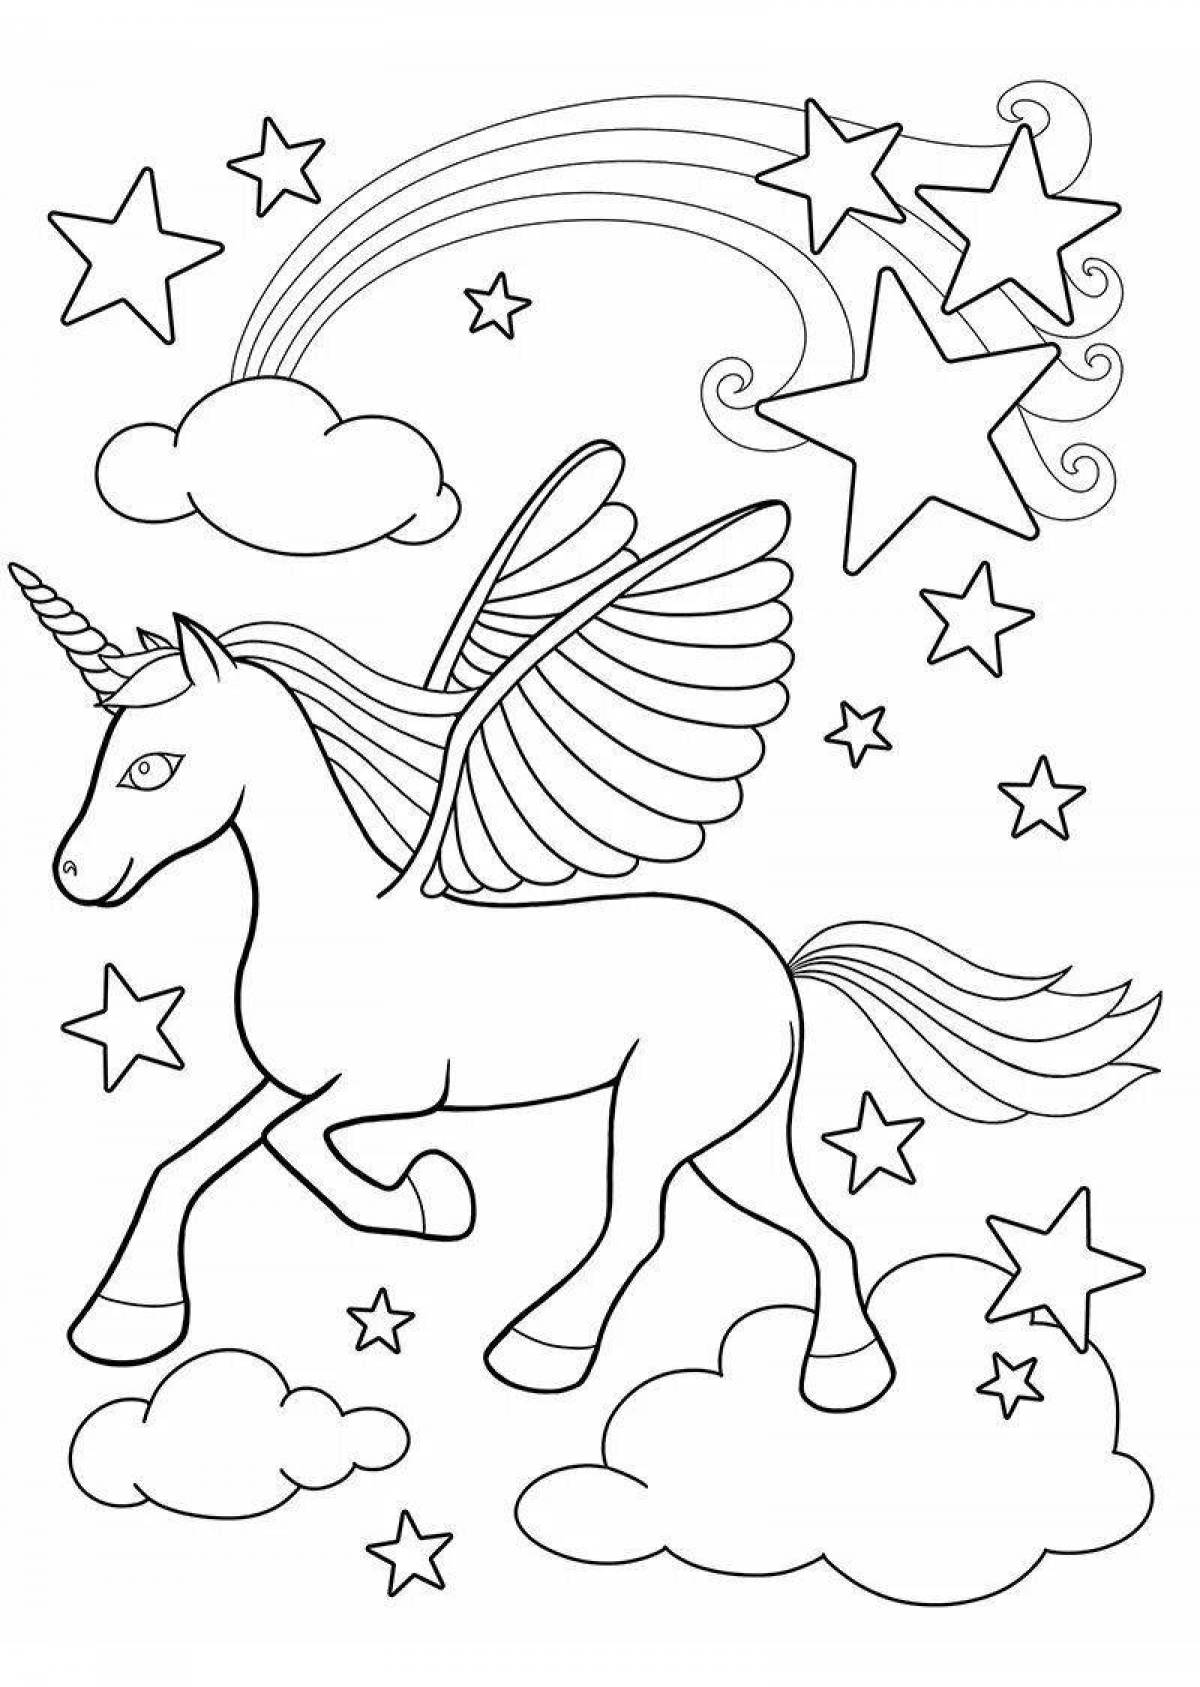 Colouring serene unicorn